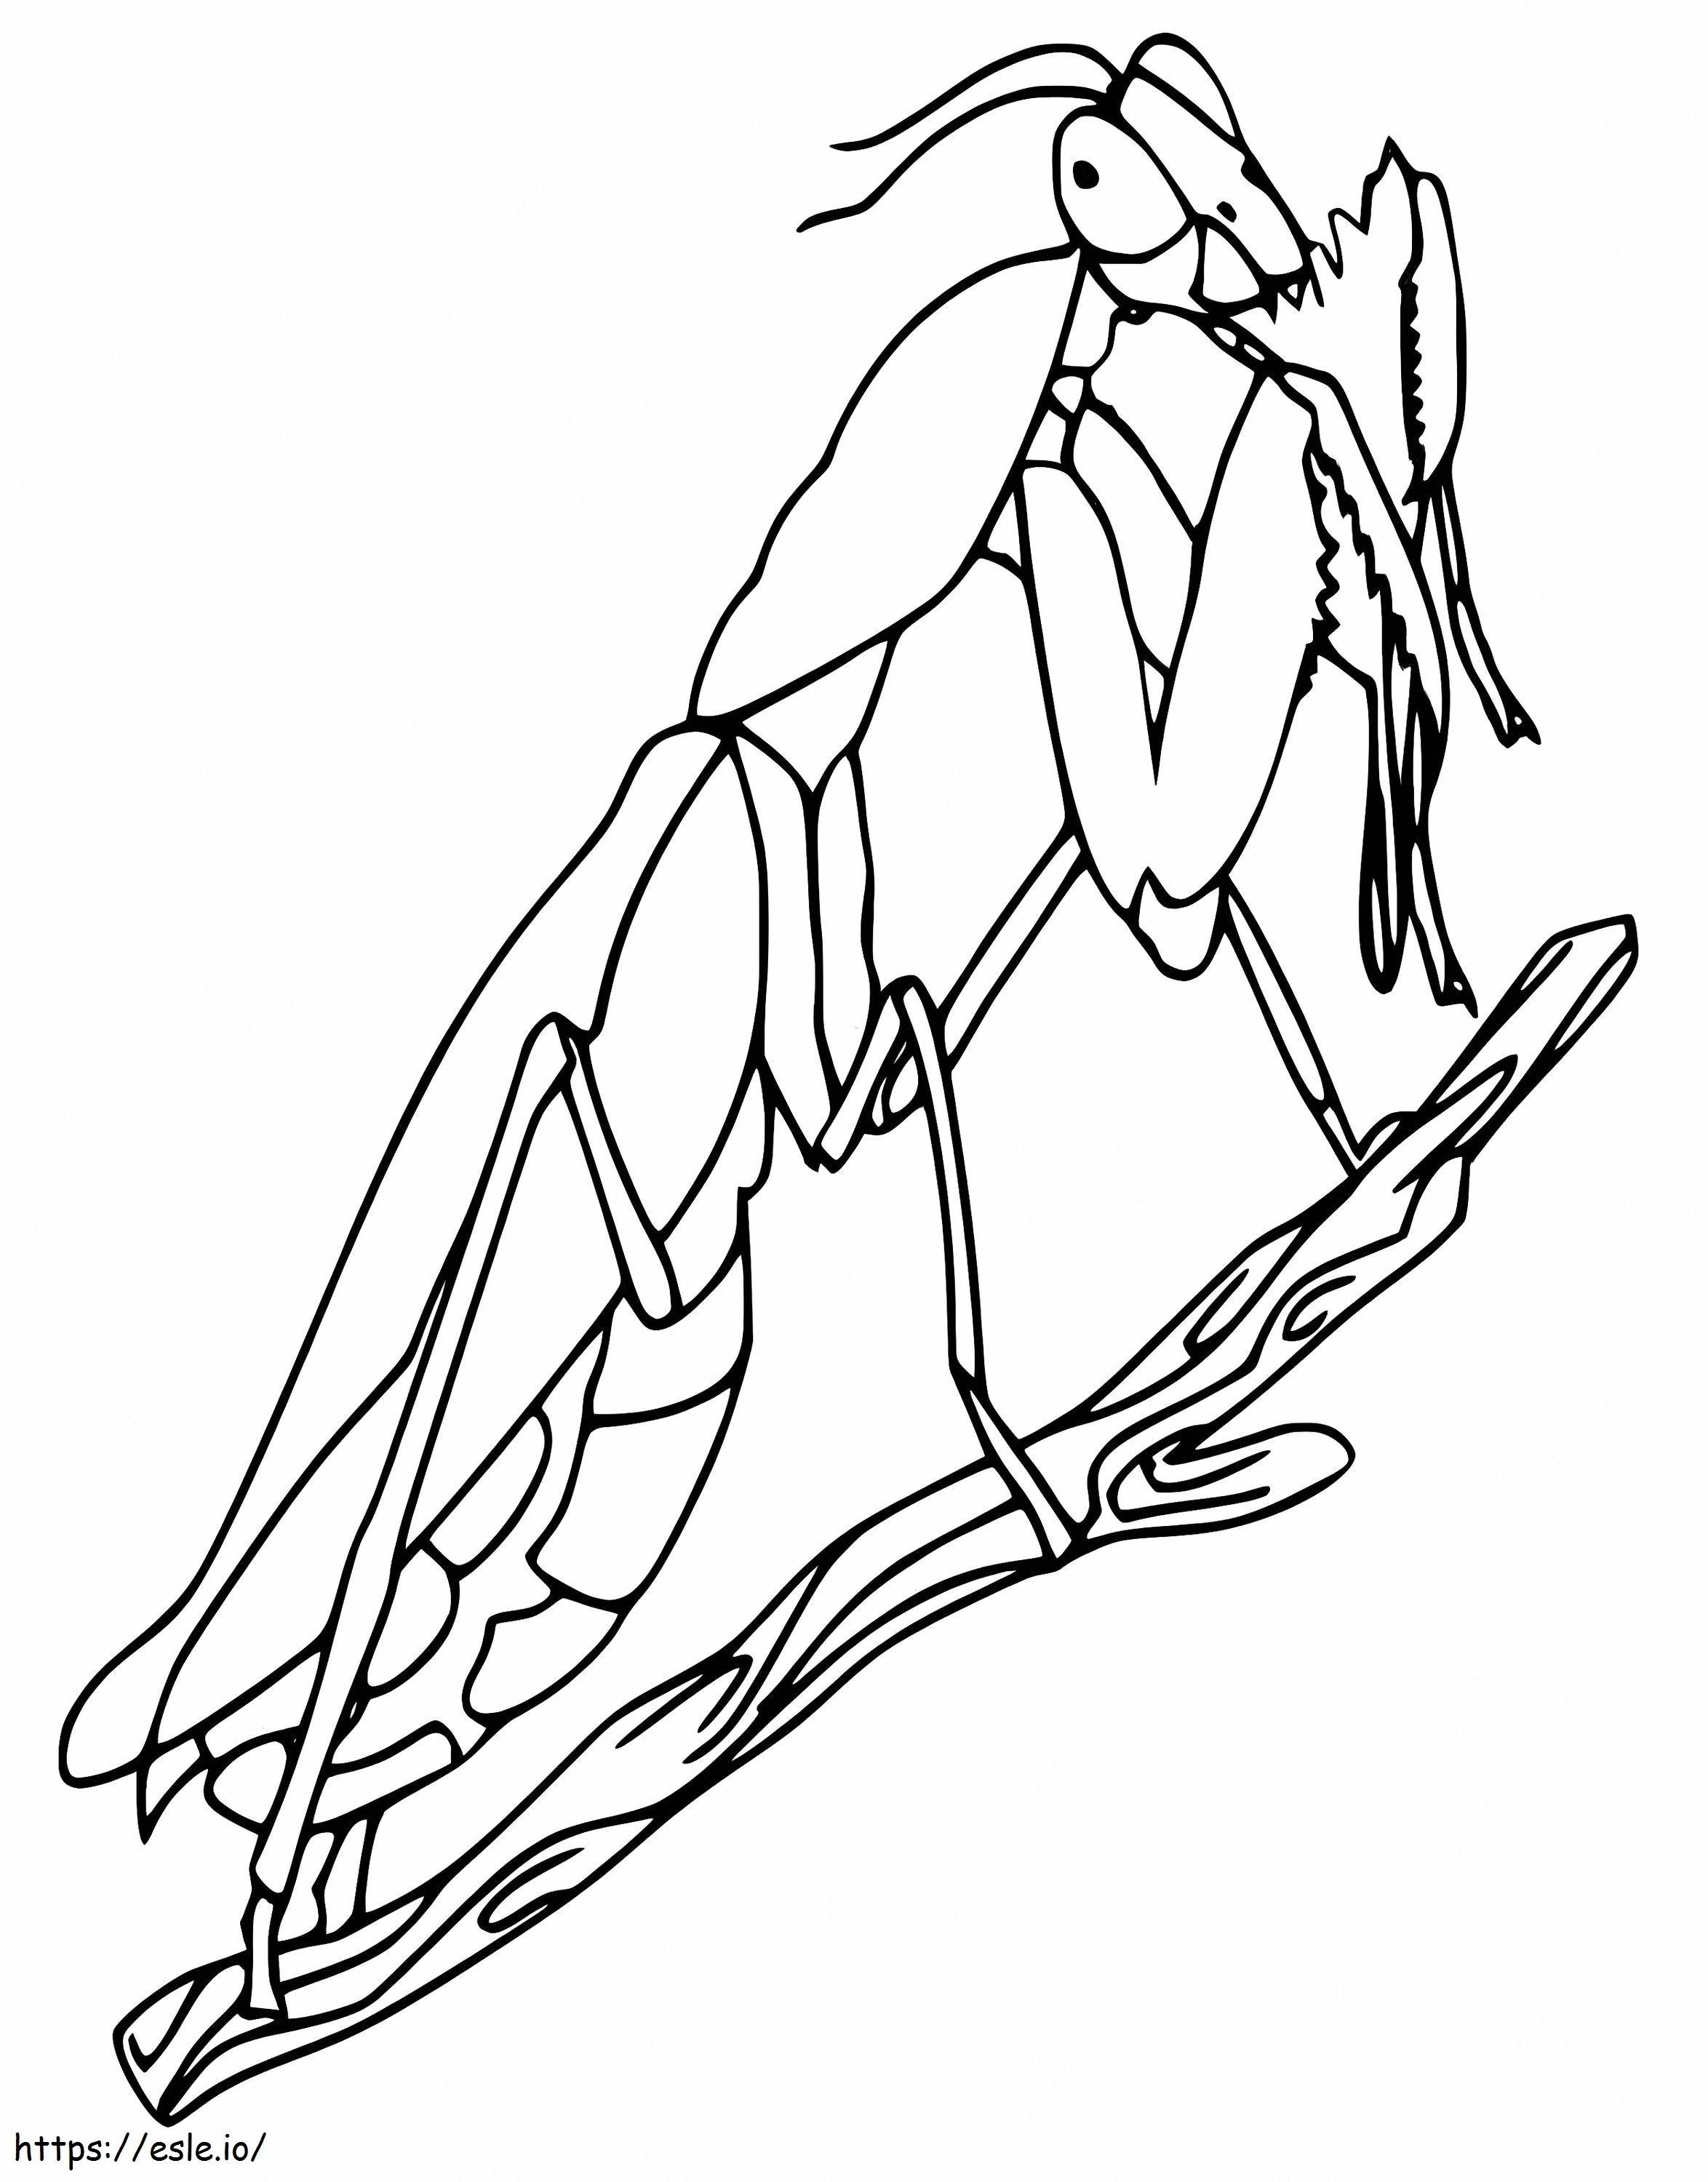 Praying Mantis On A Branch coloring page